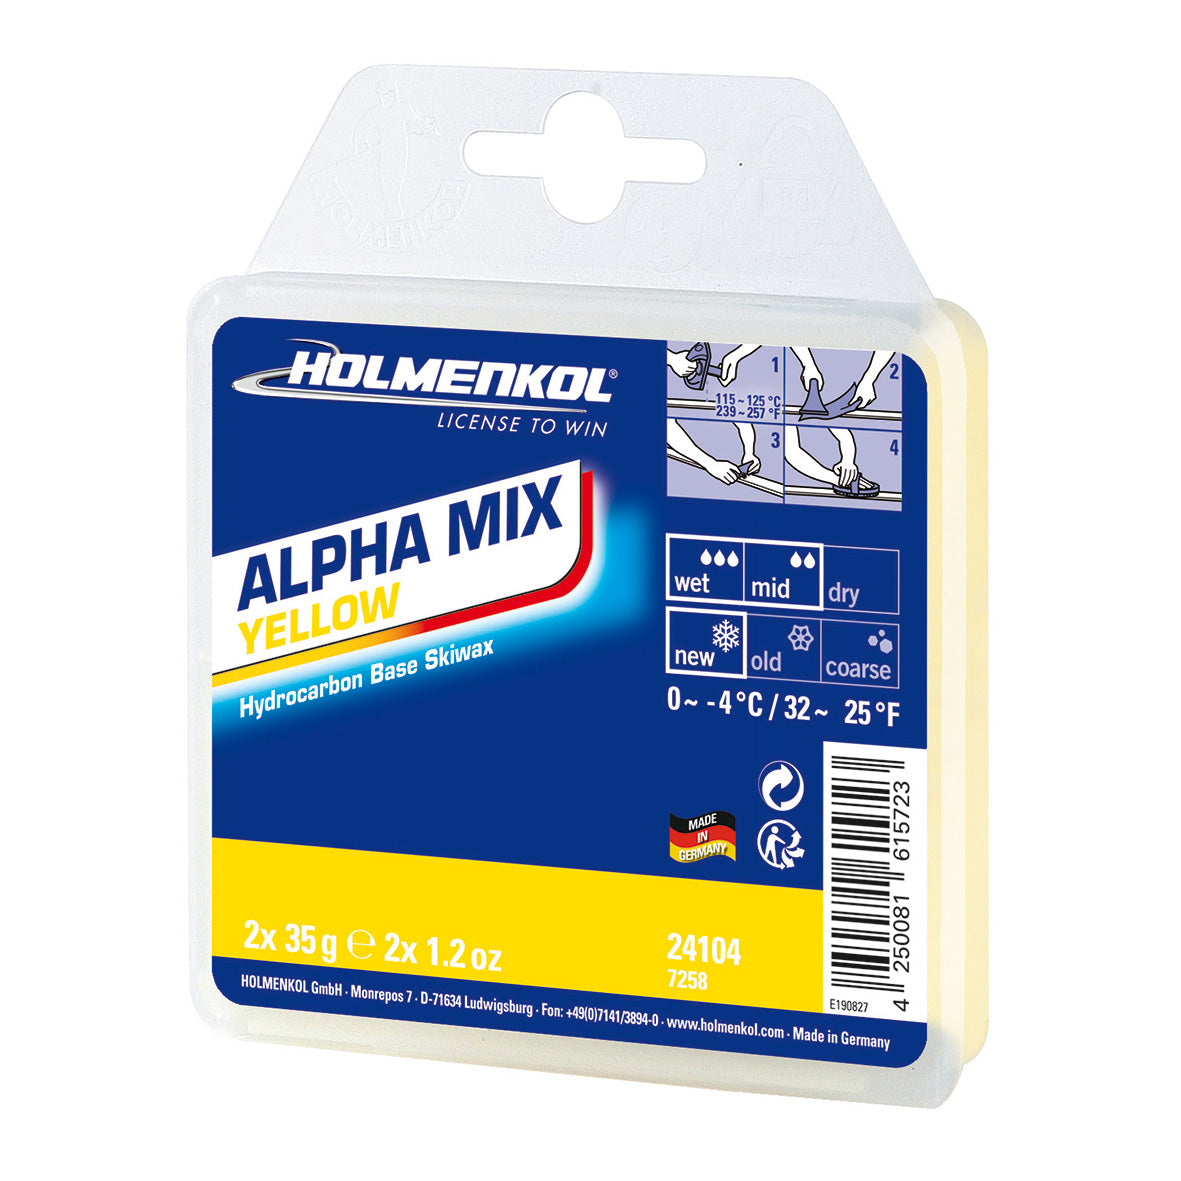 Holmenkol Alpha Mix Yellow 2x35g